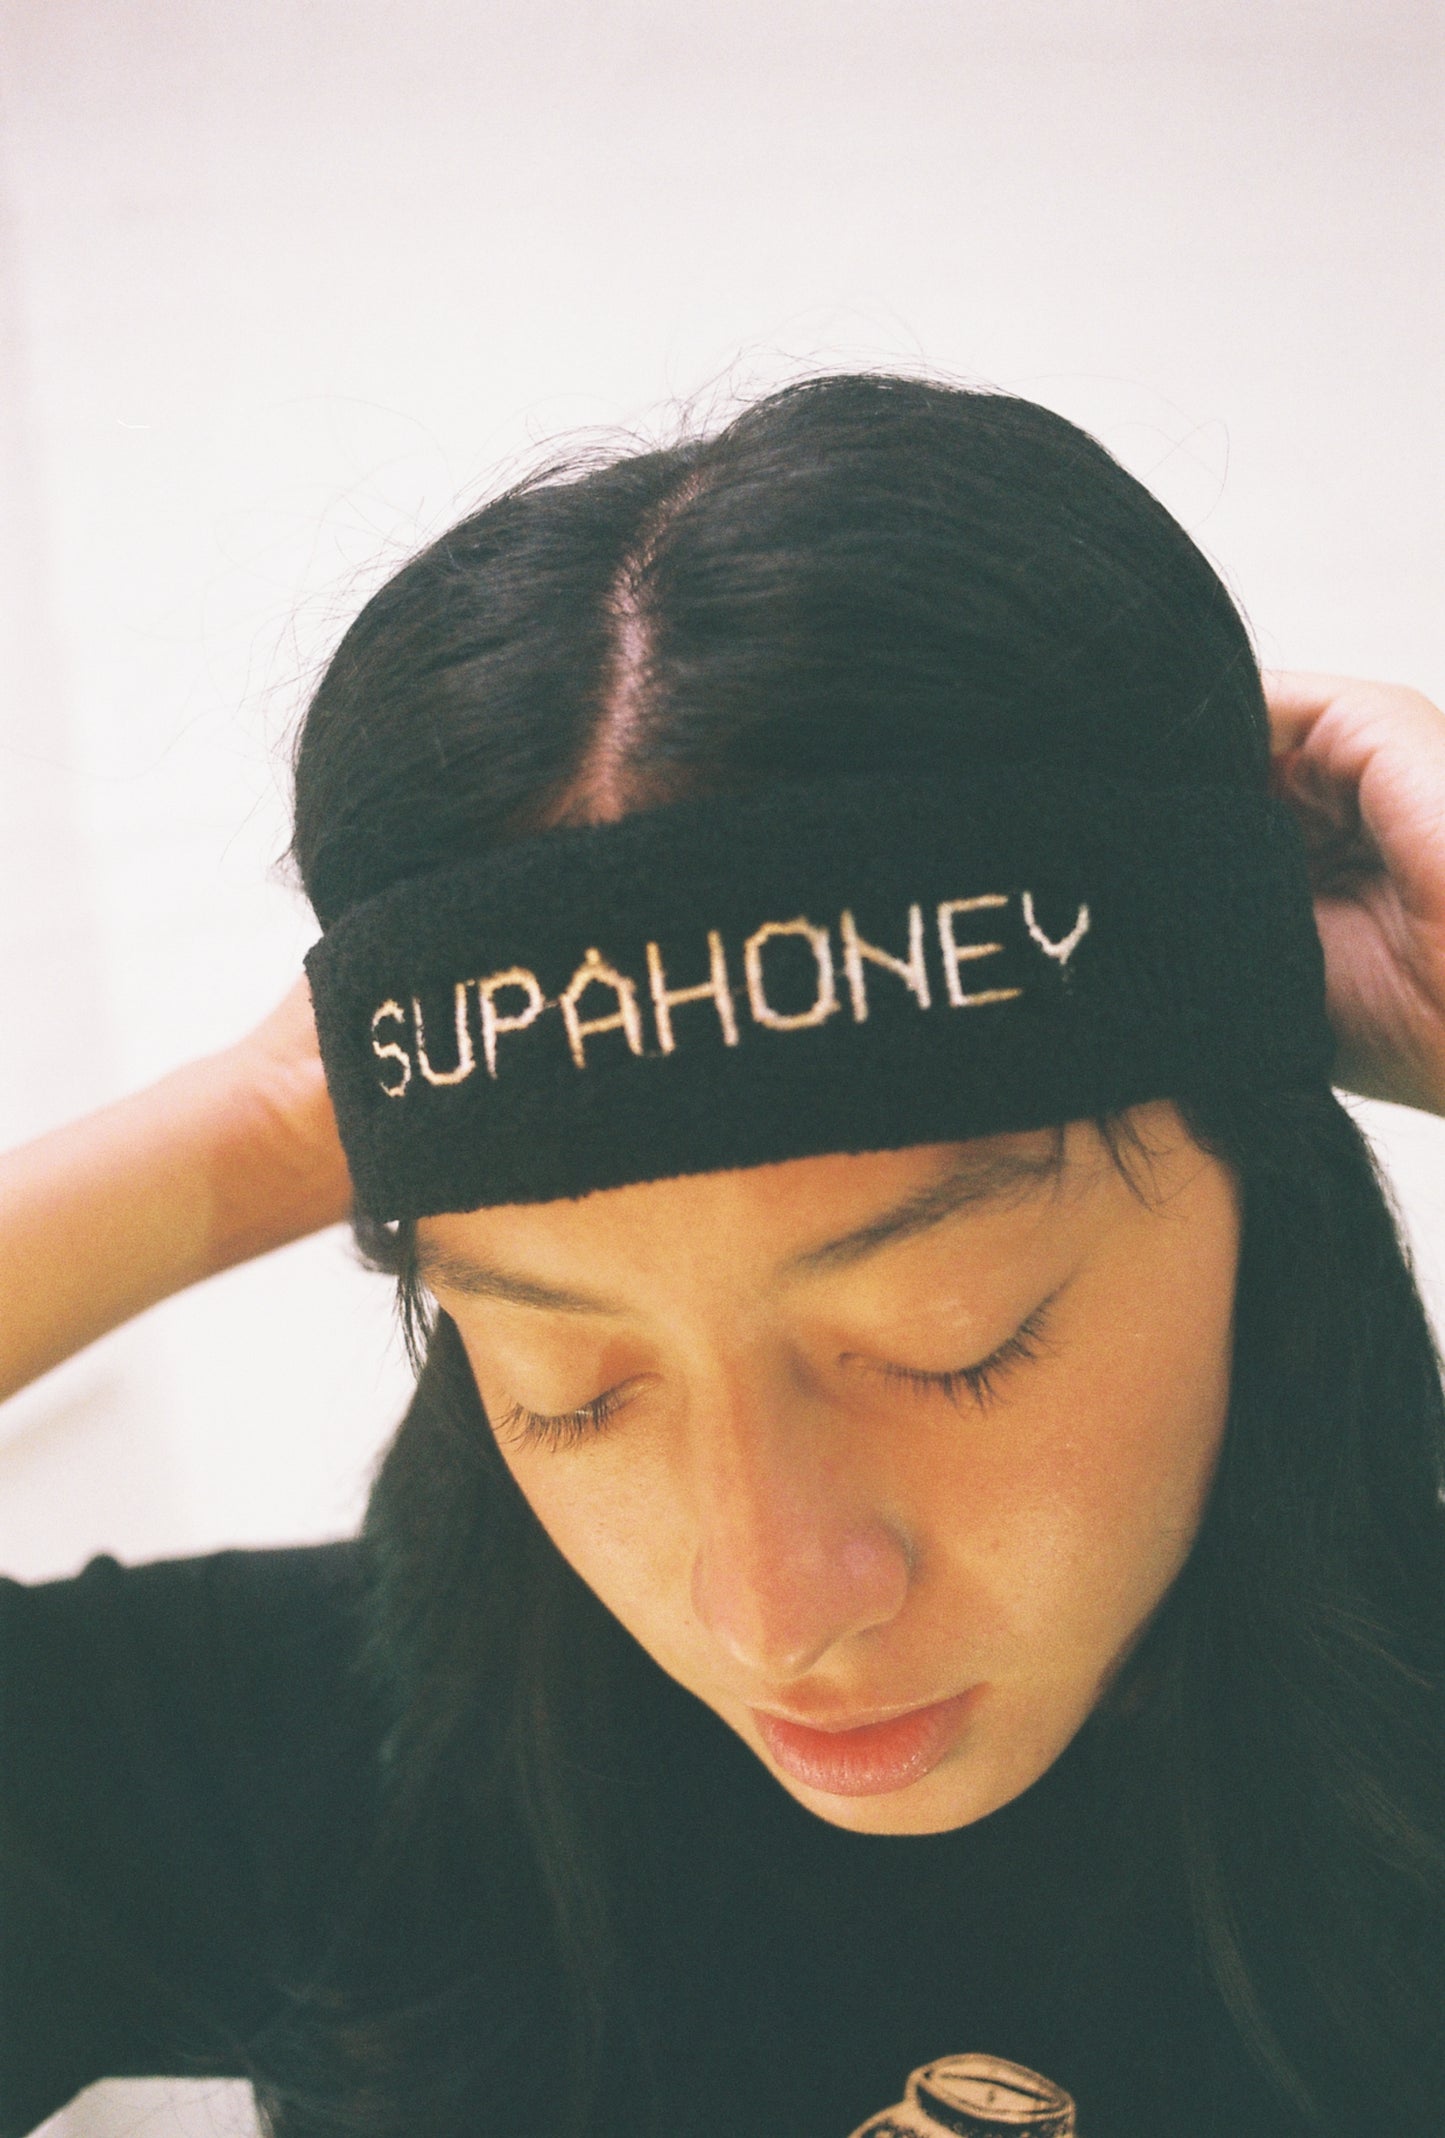 Supahoney Headbands - SOLD OUT!